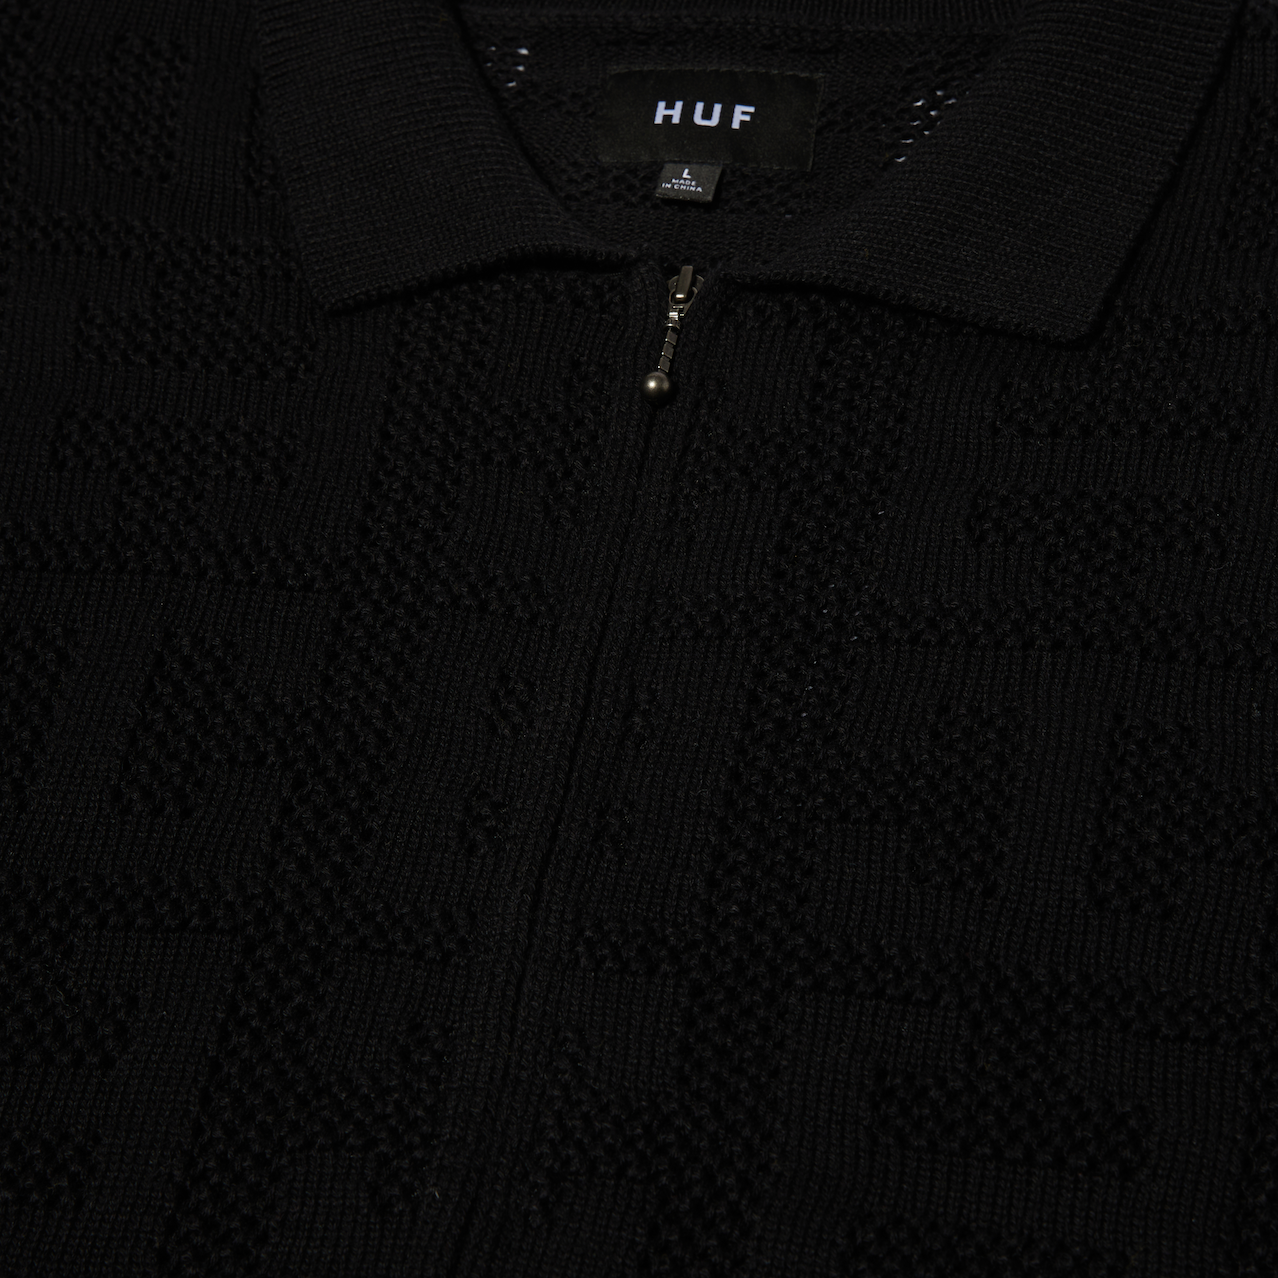 HUF Monogram Jacquard Zip S/S Sweater Black